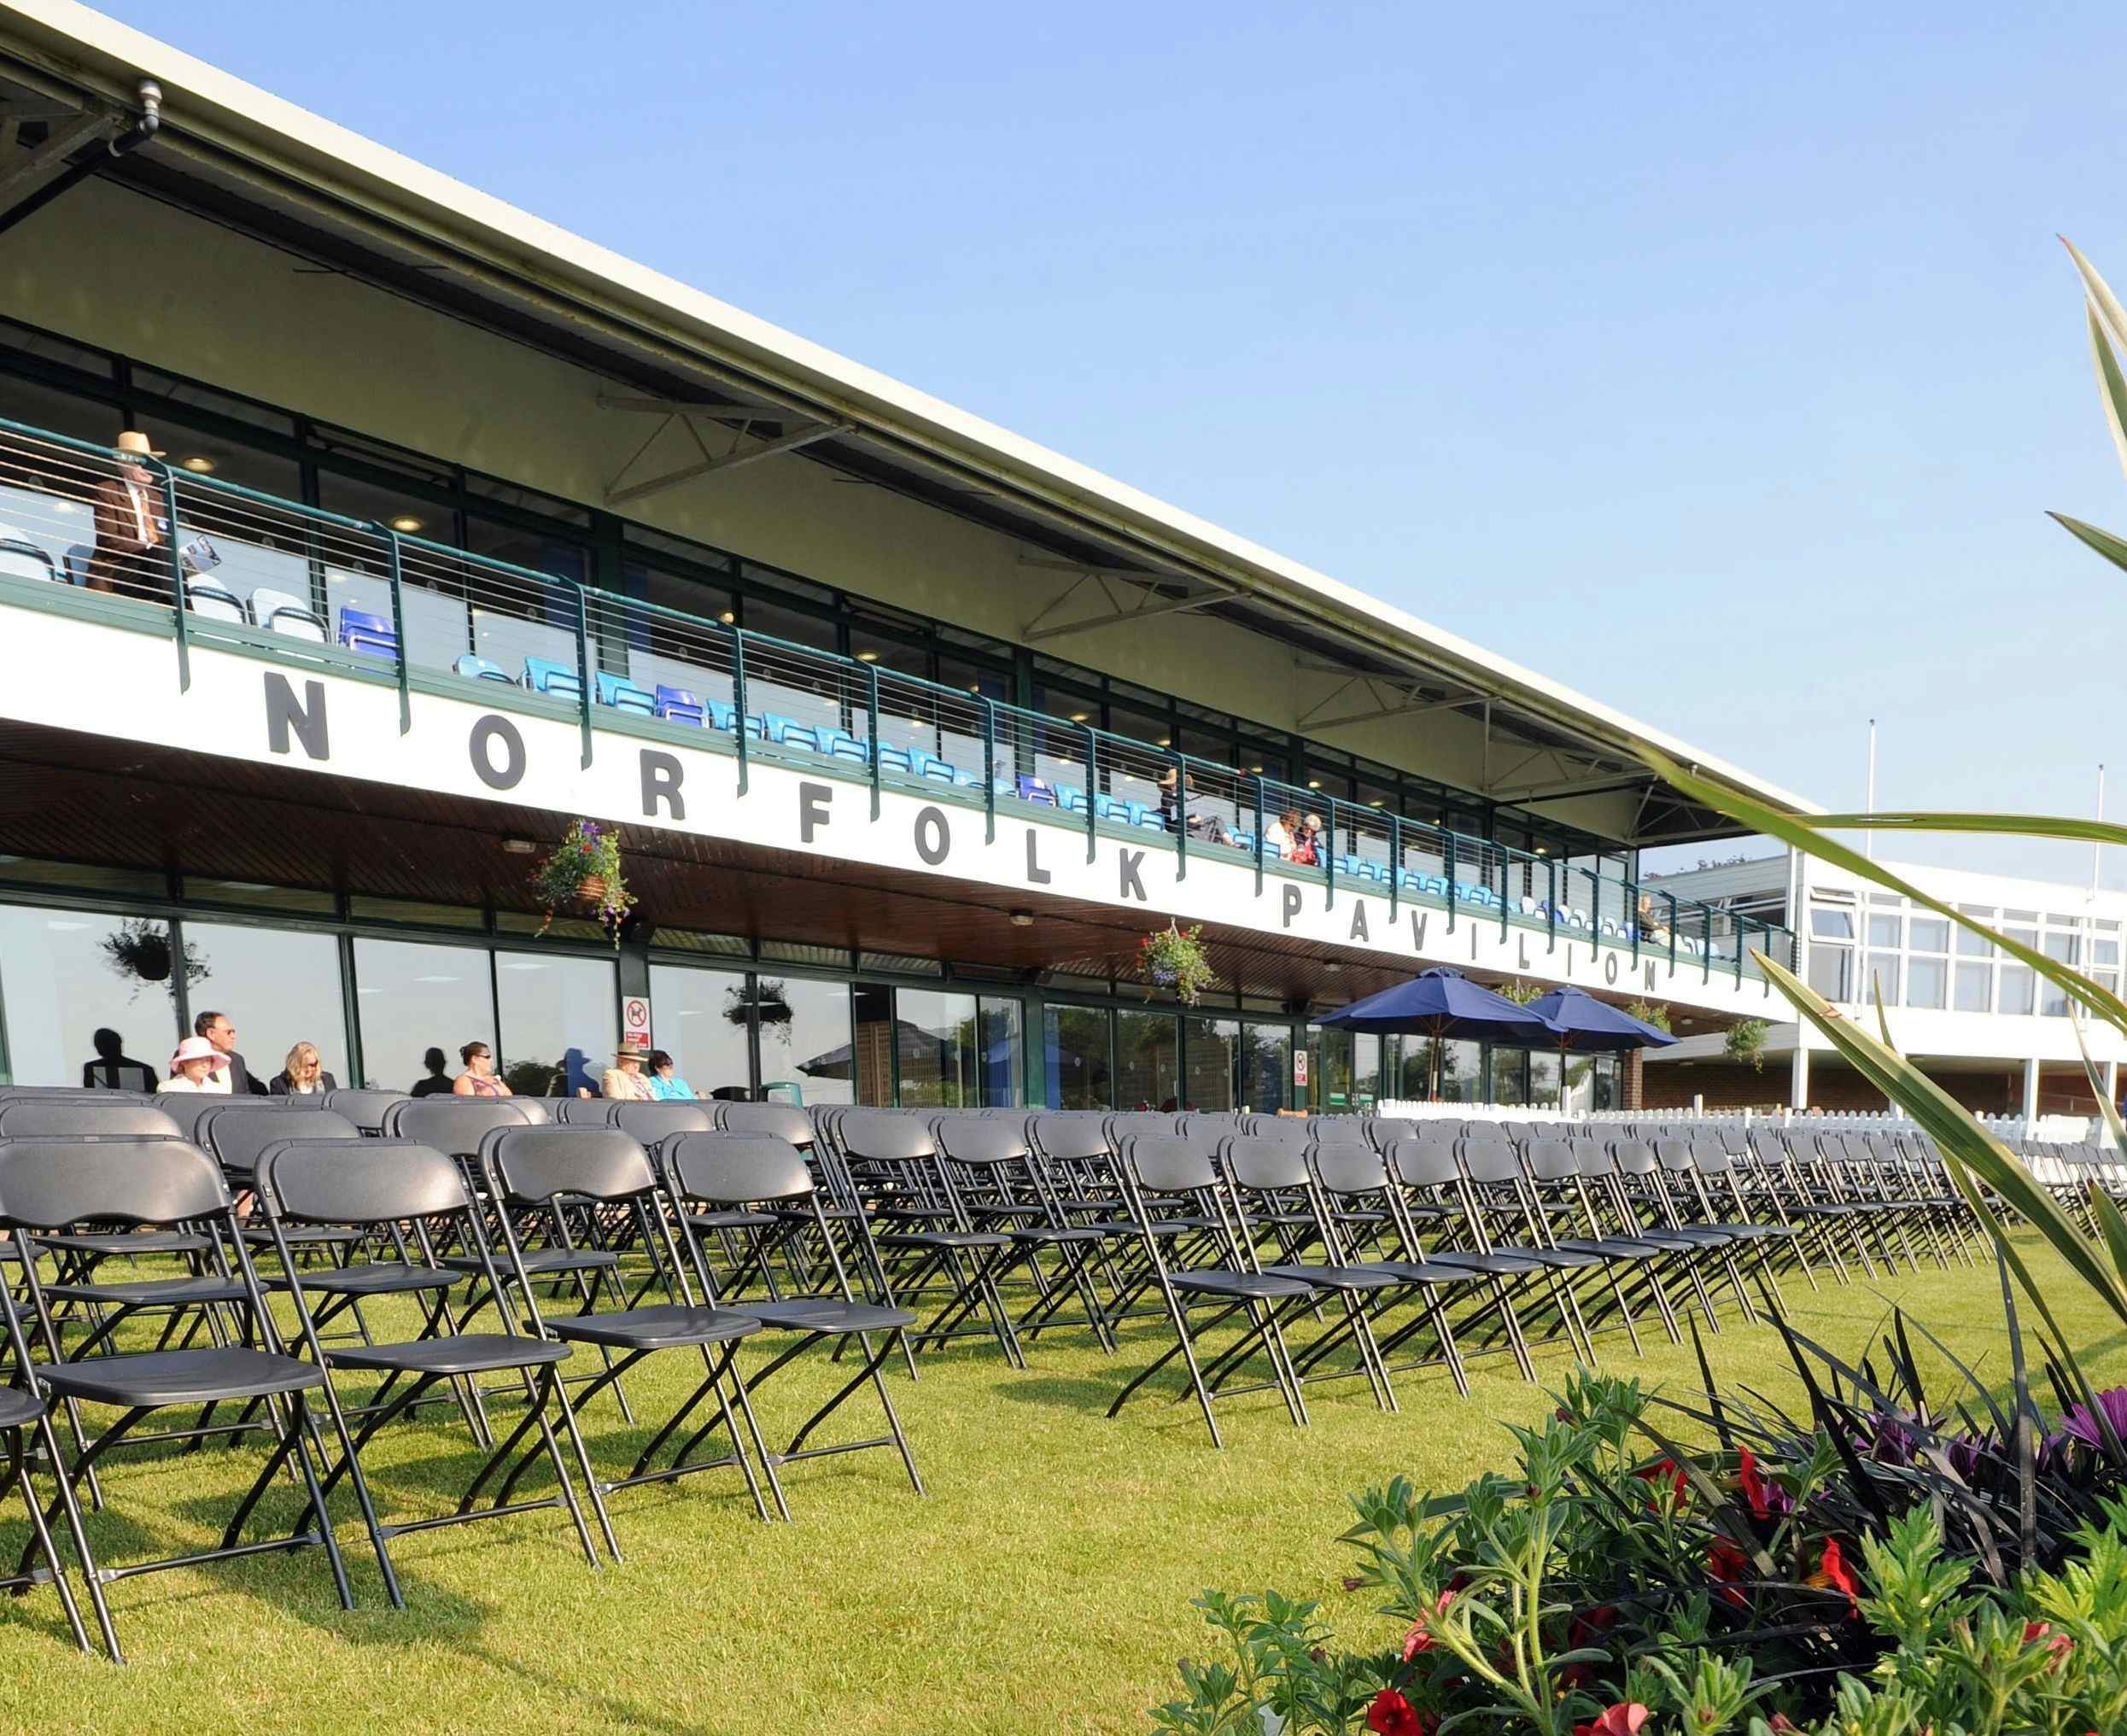 Norfolk Pavilion, South of England Event Centre